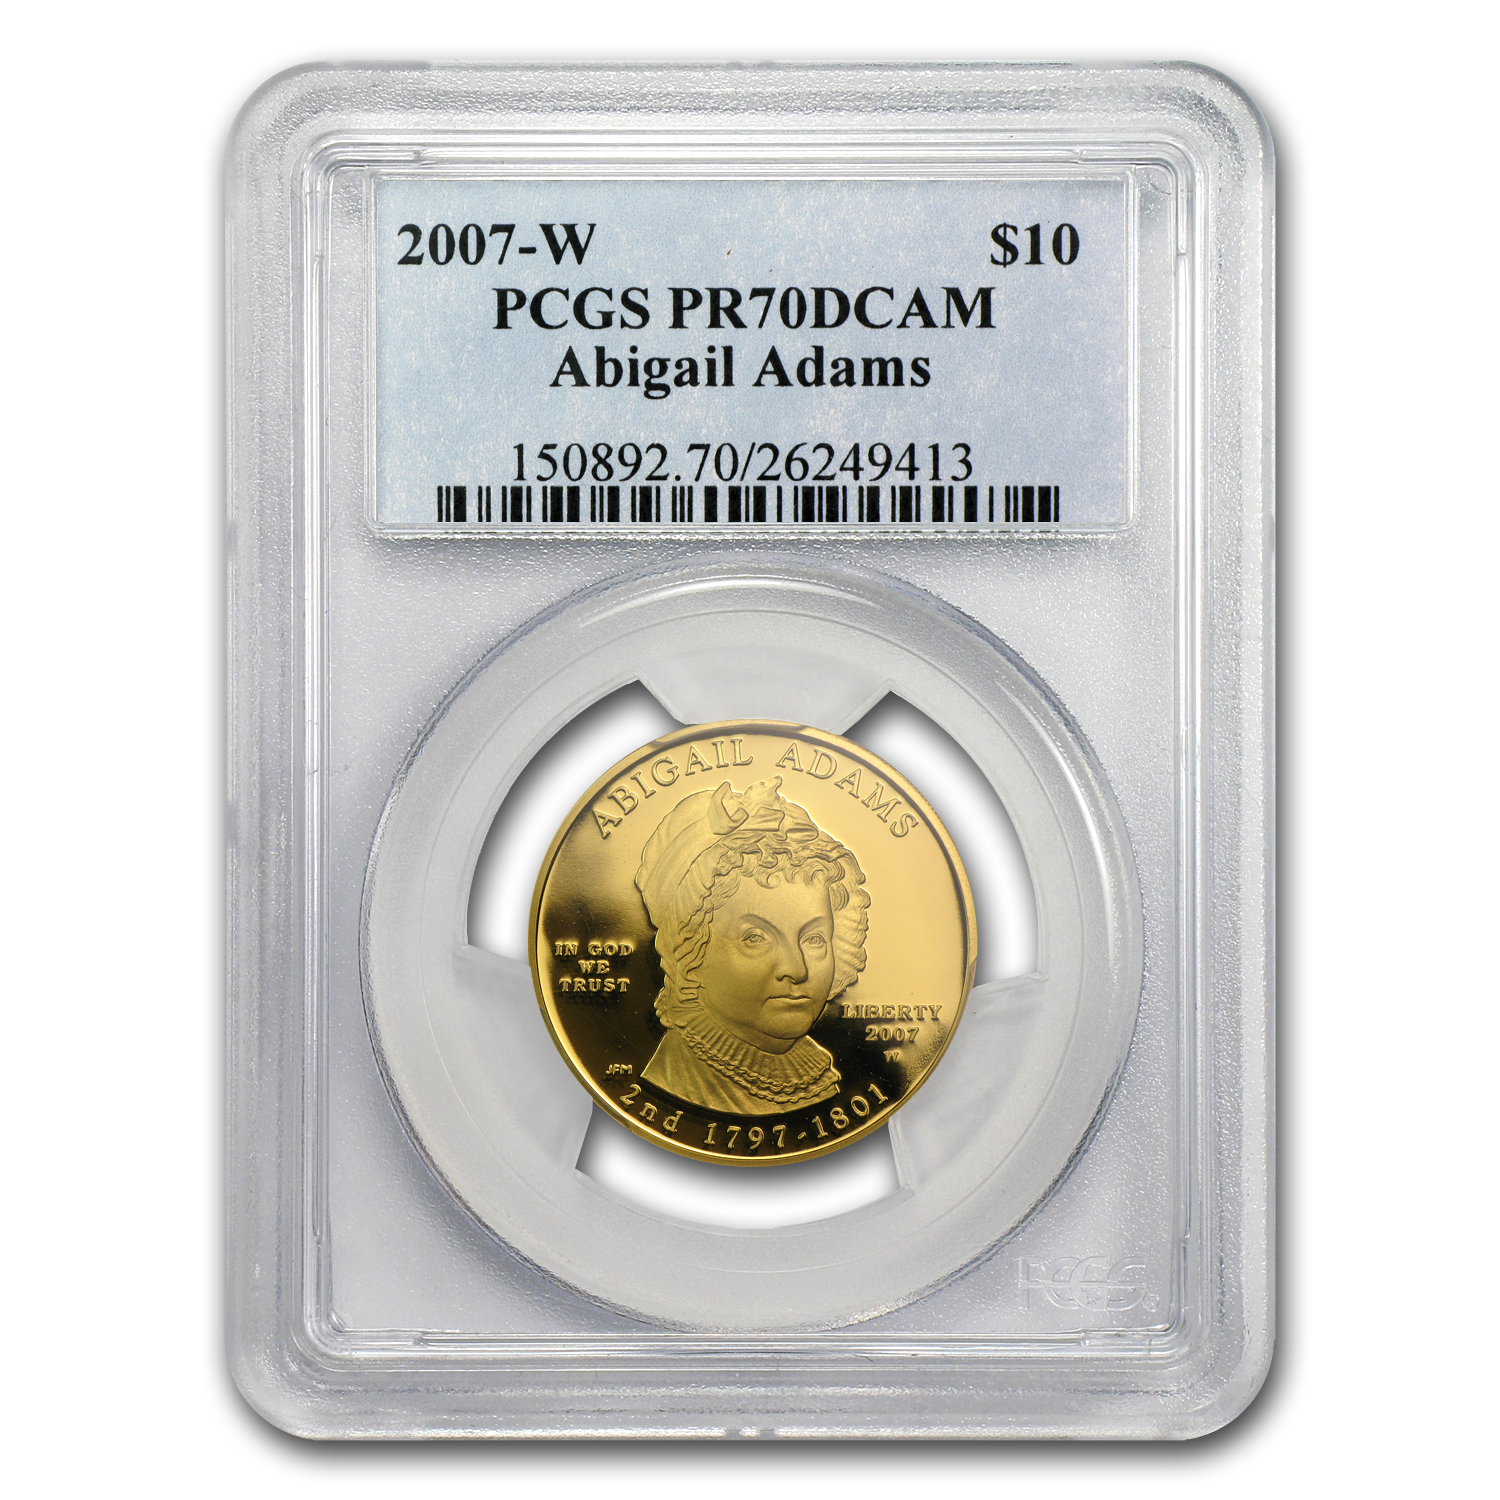 Buy 2007-W 1/2 oz Proof Gold Abigail Adams PR-70 PCGS - Click Image to Close